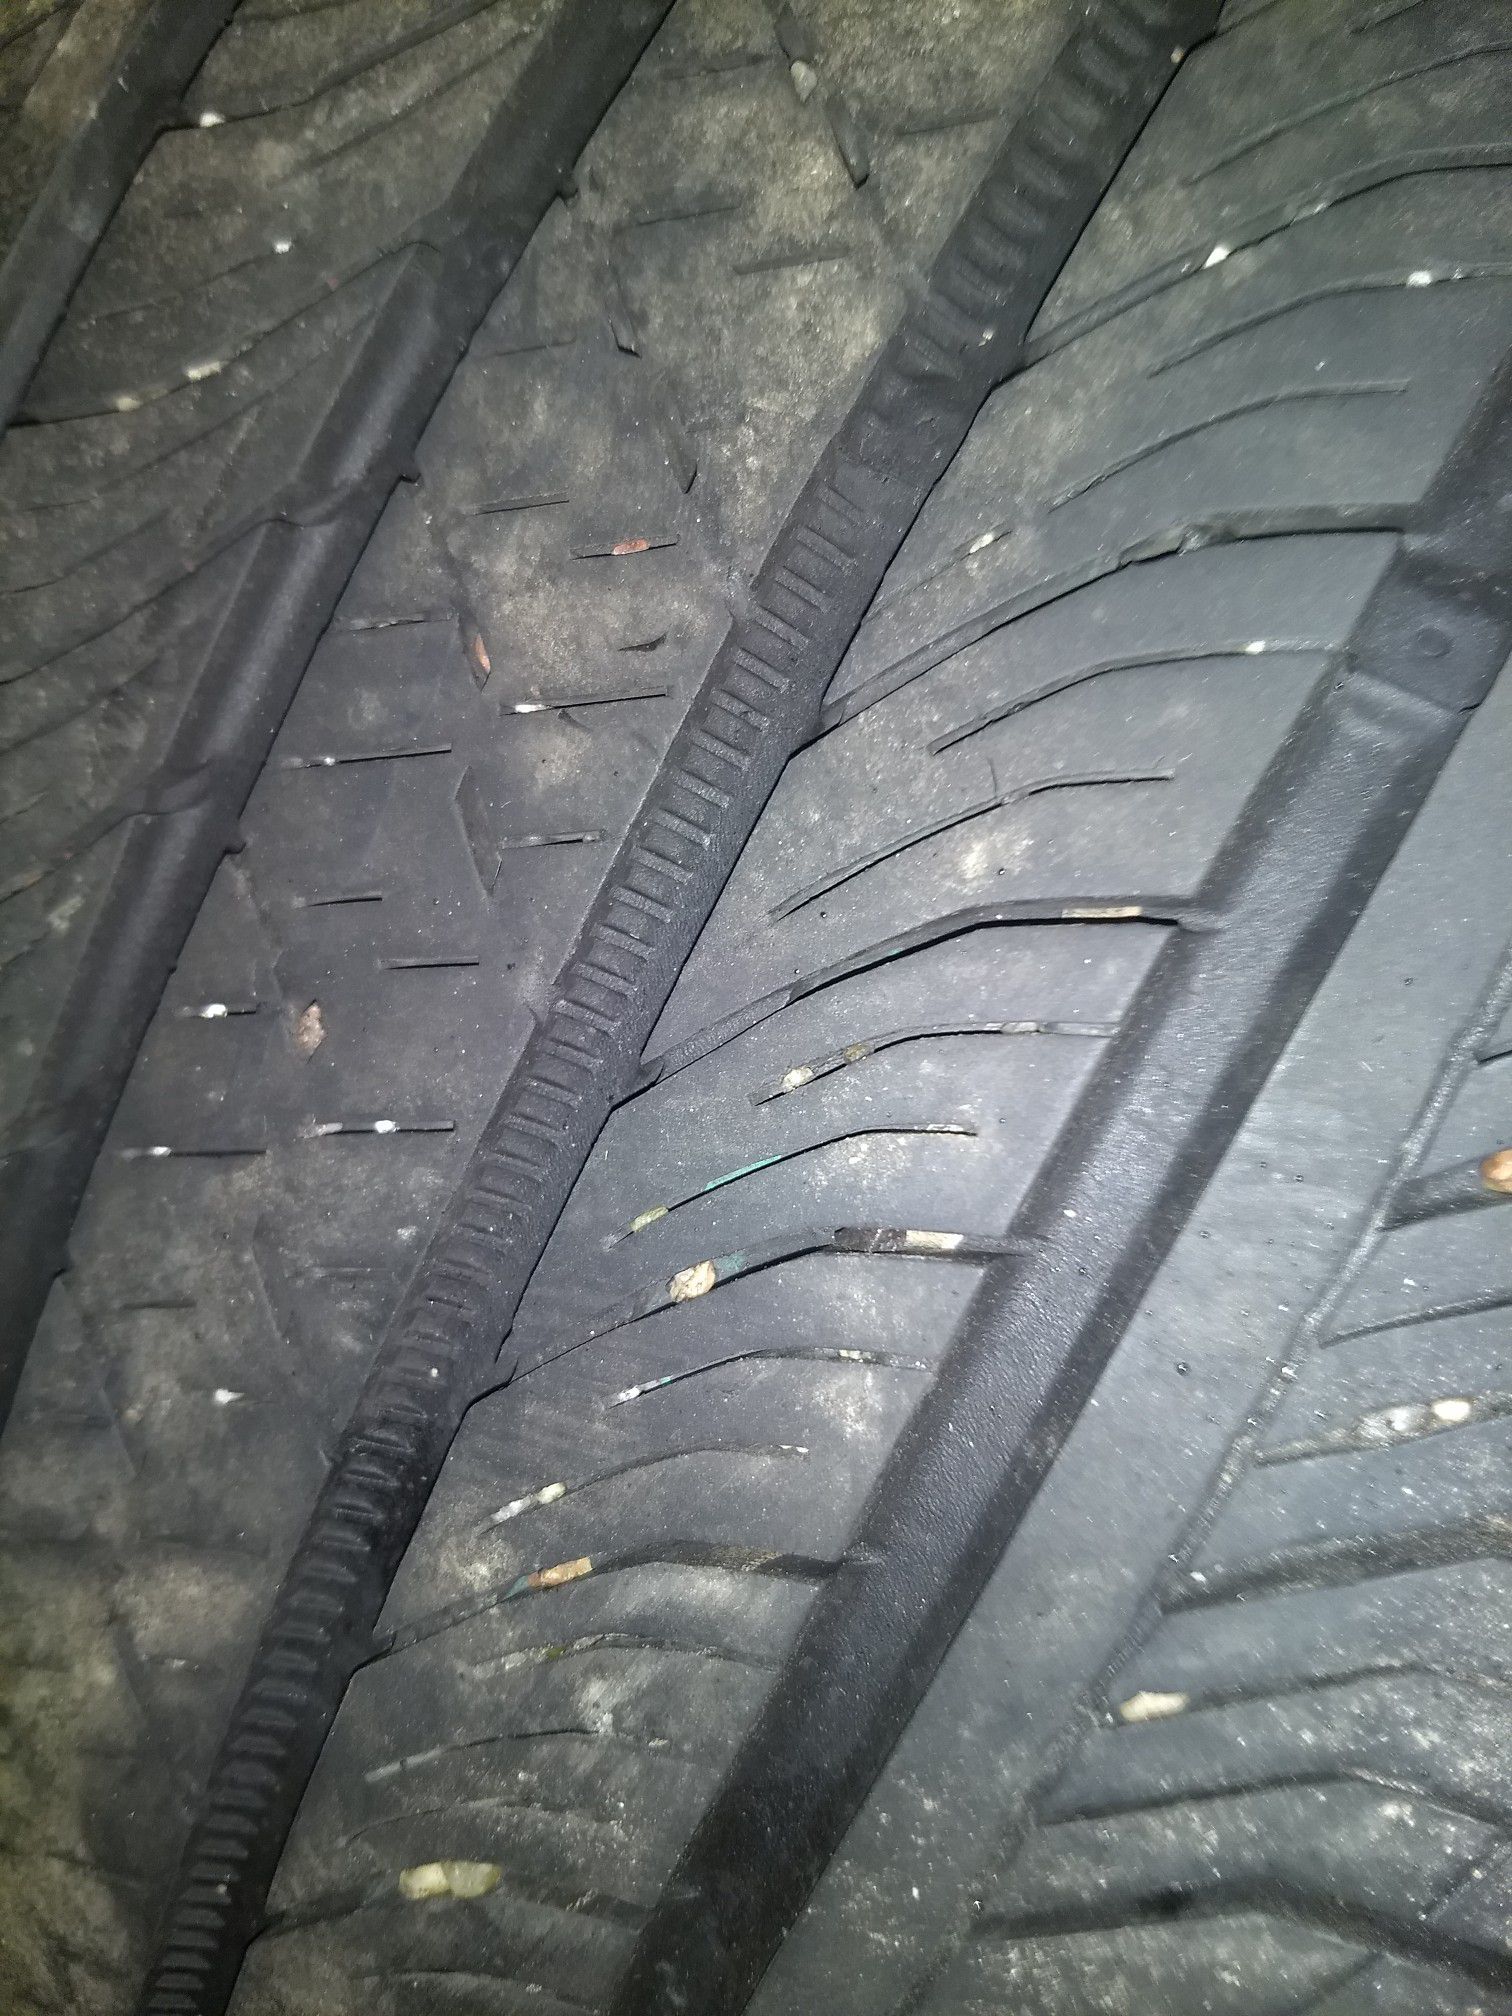 Tires..used slightly